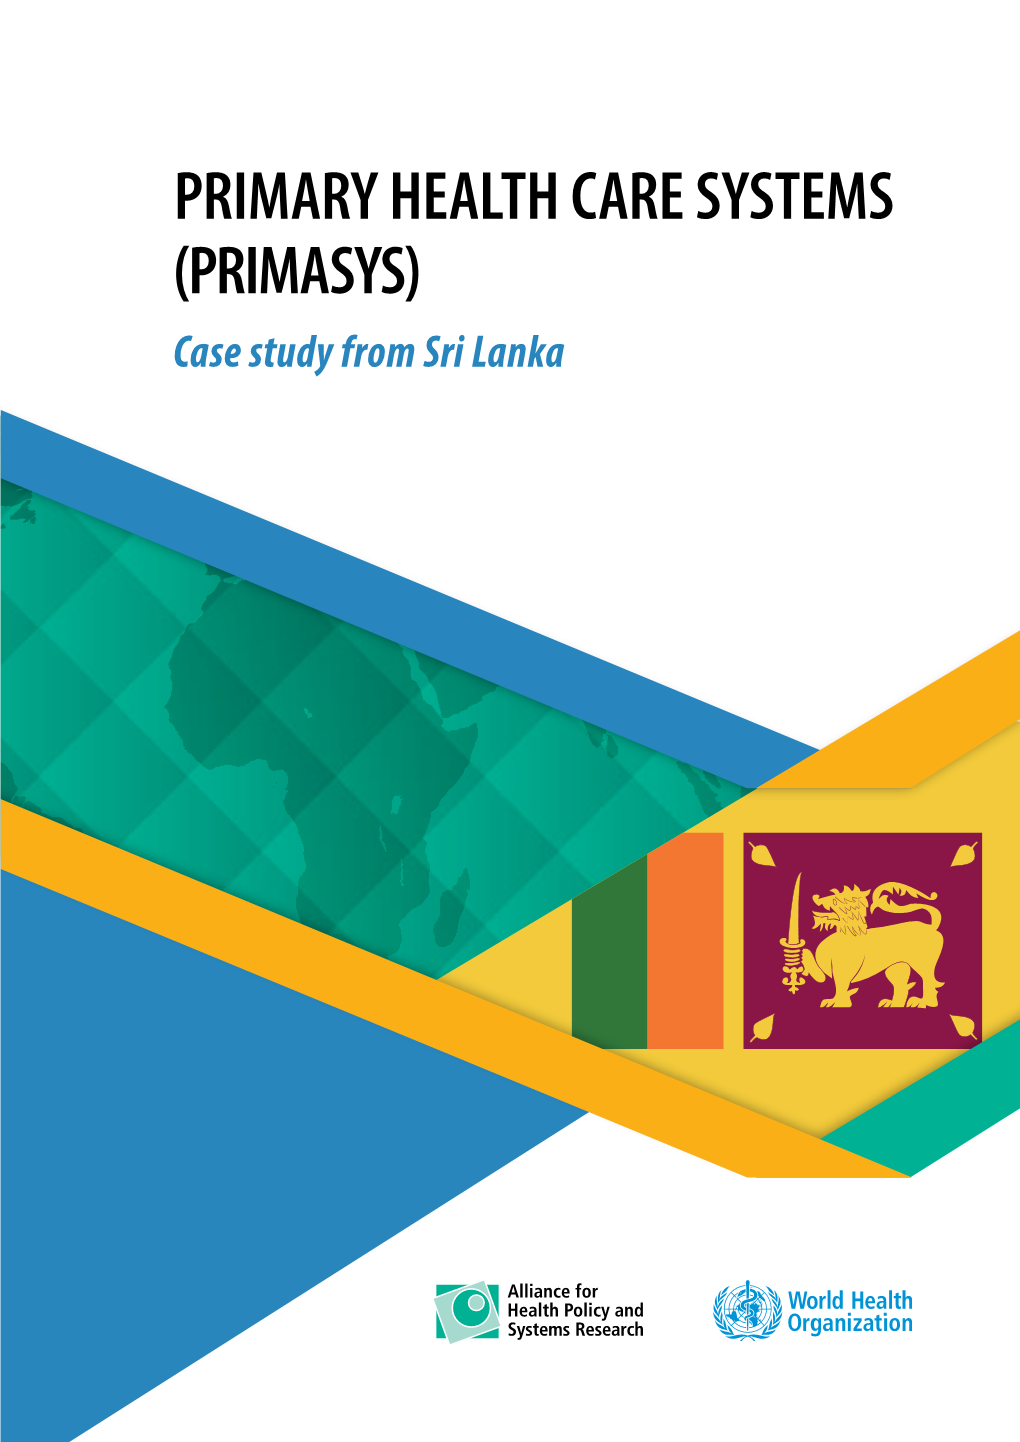 Case Study from Sri Lanka